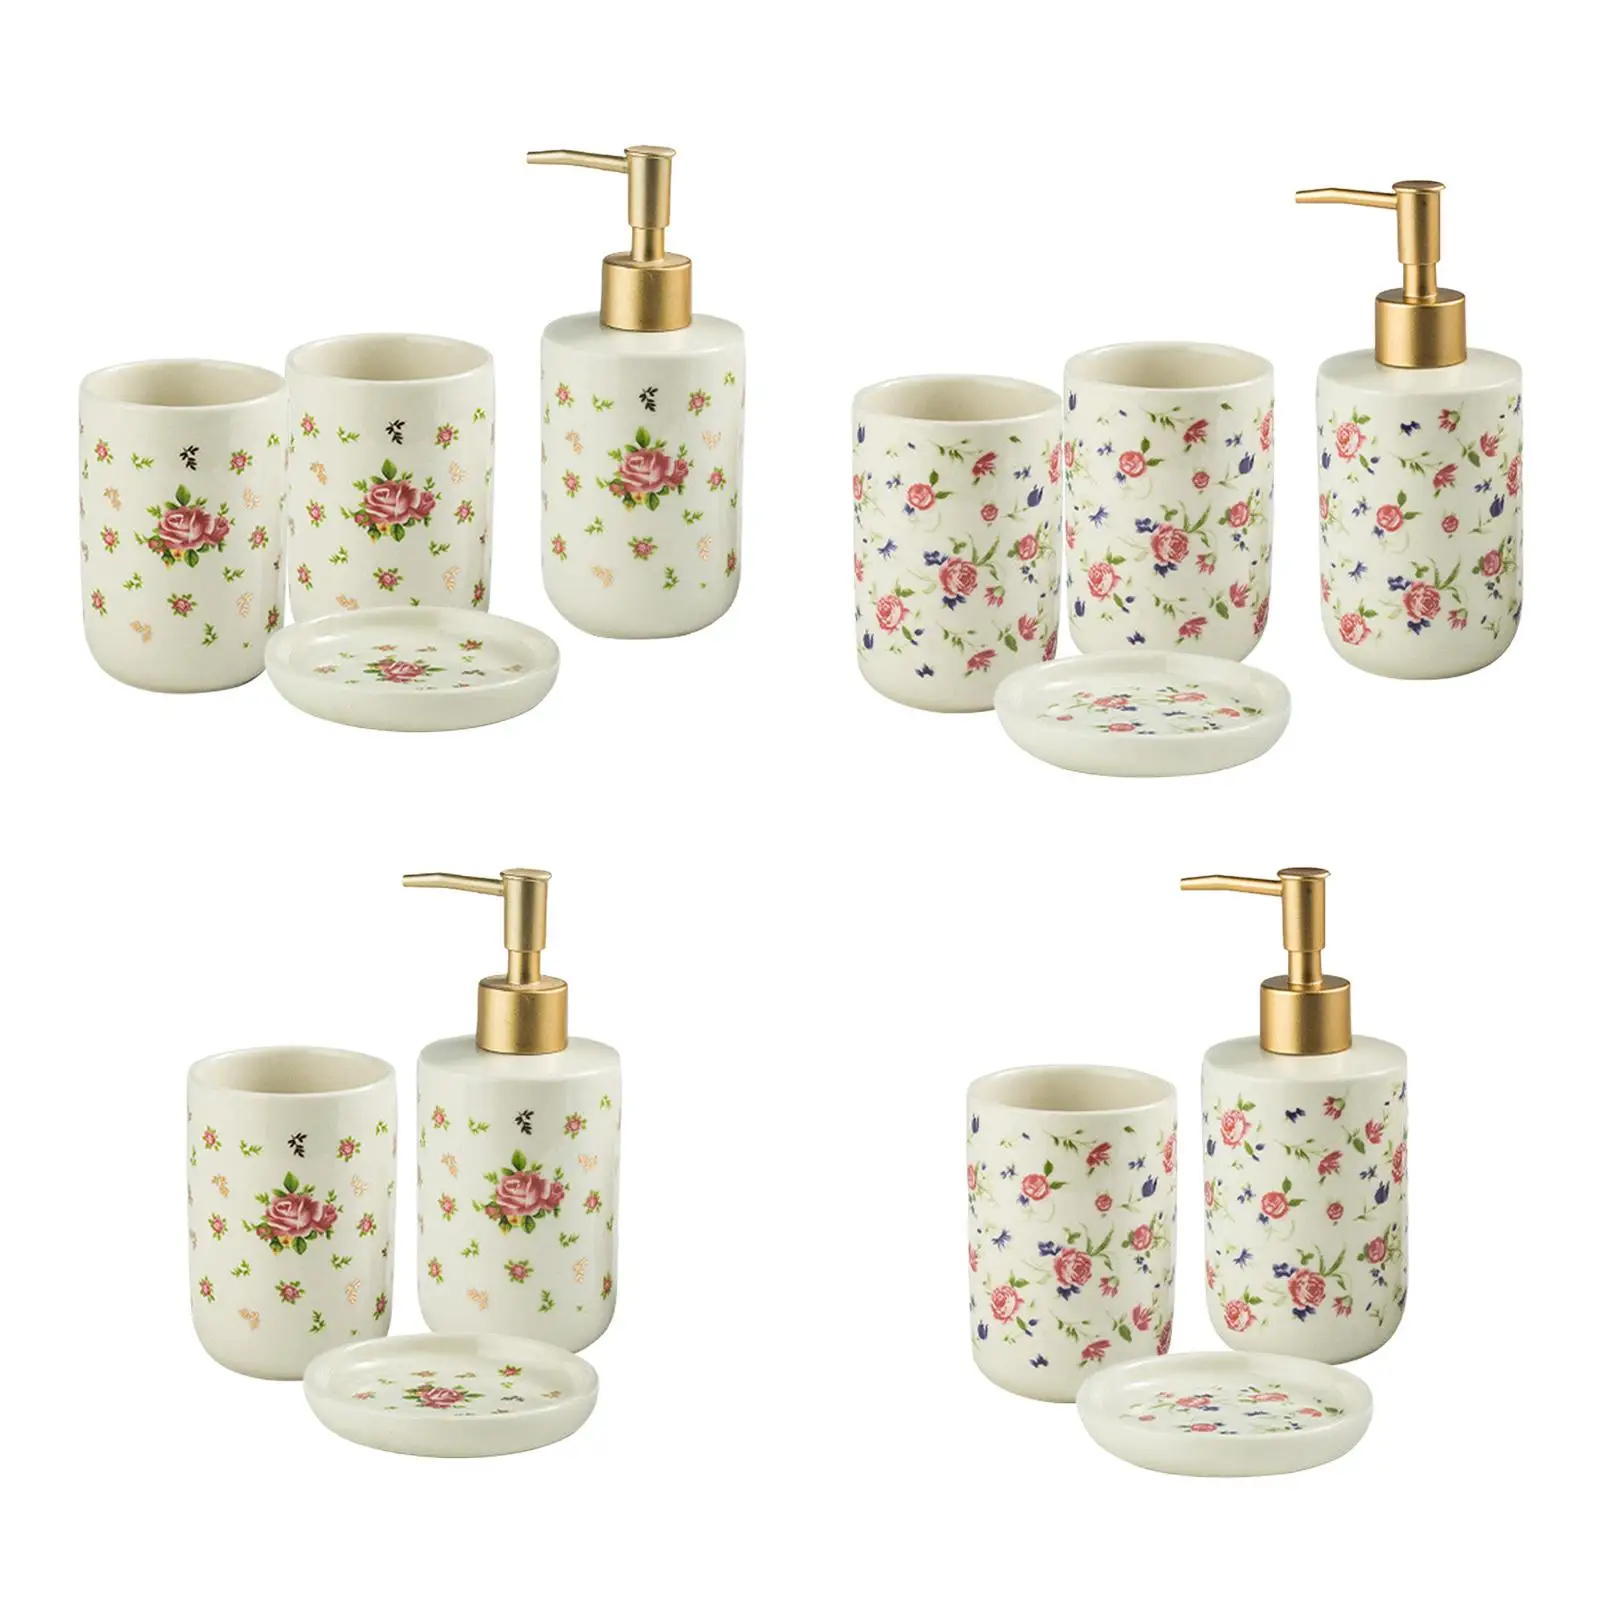 Ceramic Bathroom Accessory Set, Flower Pattern Luxury Toothbrush Holder, Soap Lotion Dispenser,